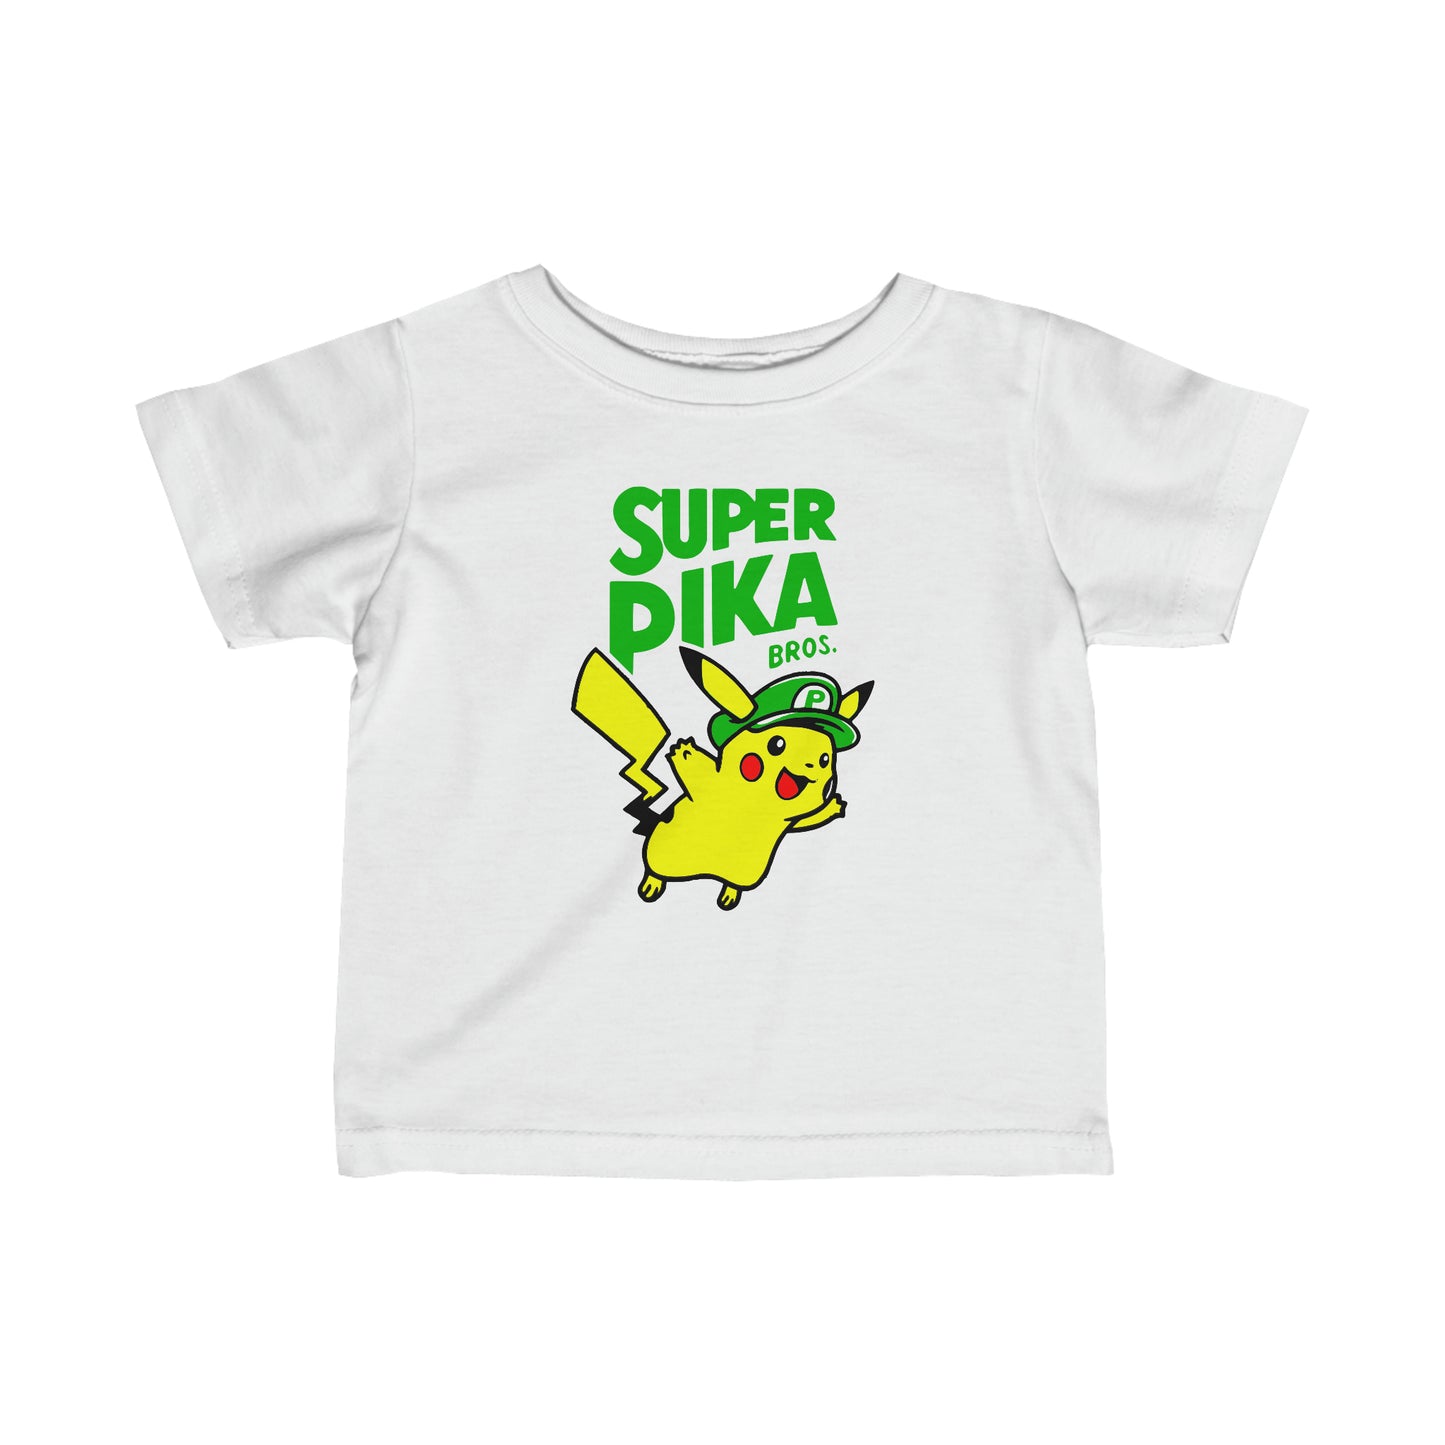 Super Pika Bros - Infant Green